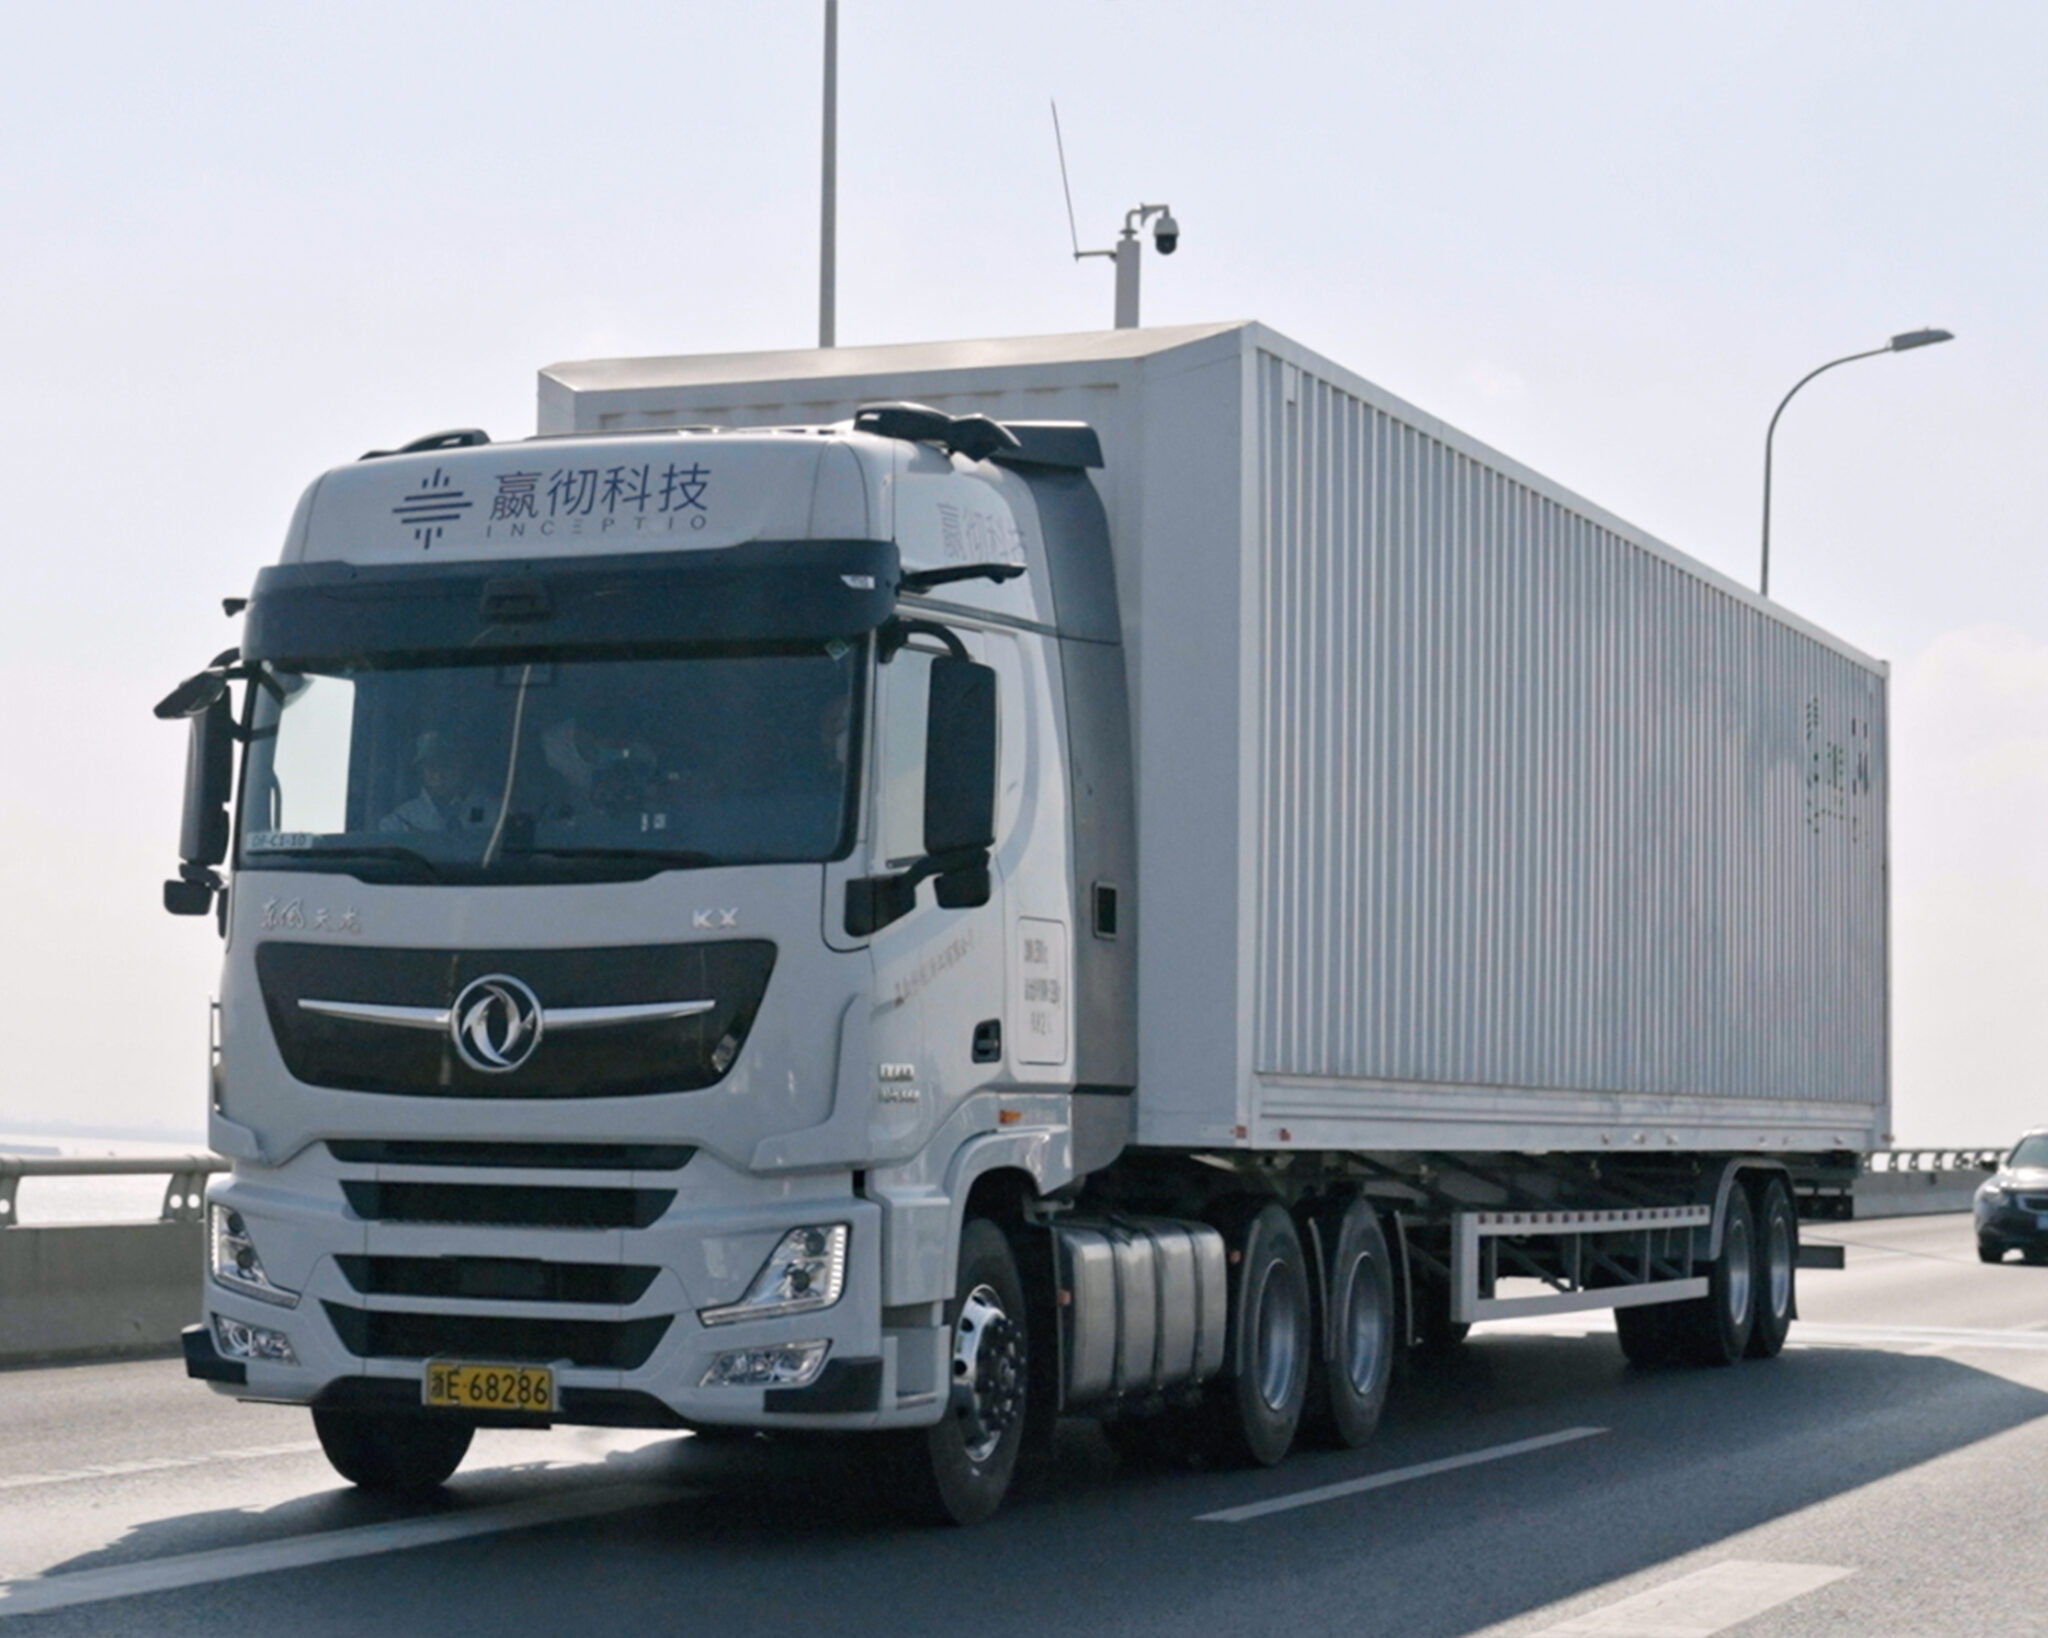 milestone-for-autonomous-heavy-duty-truck-commercialization